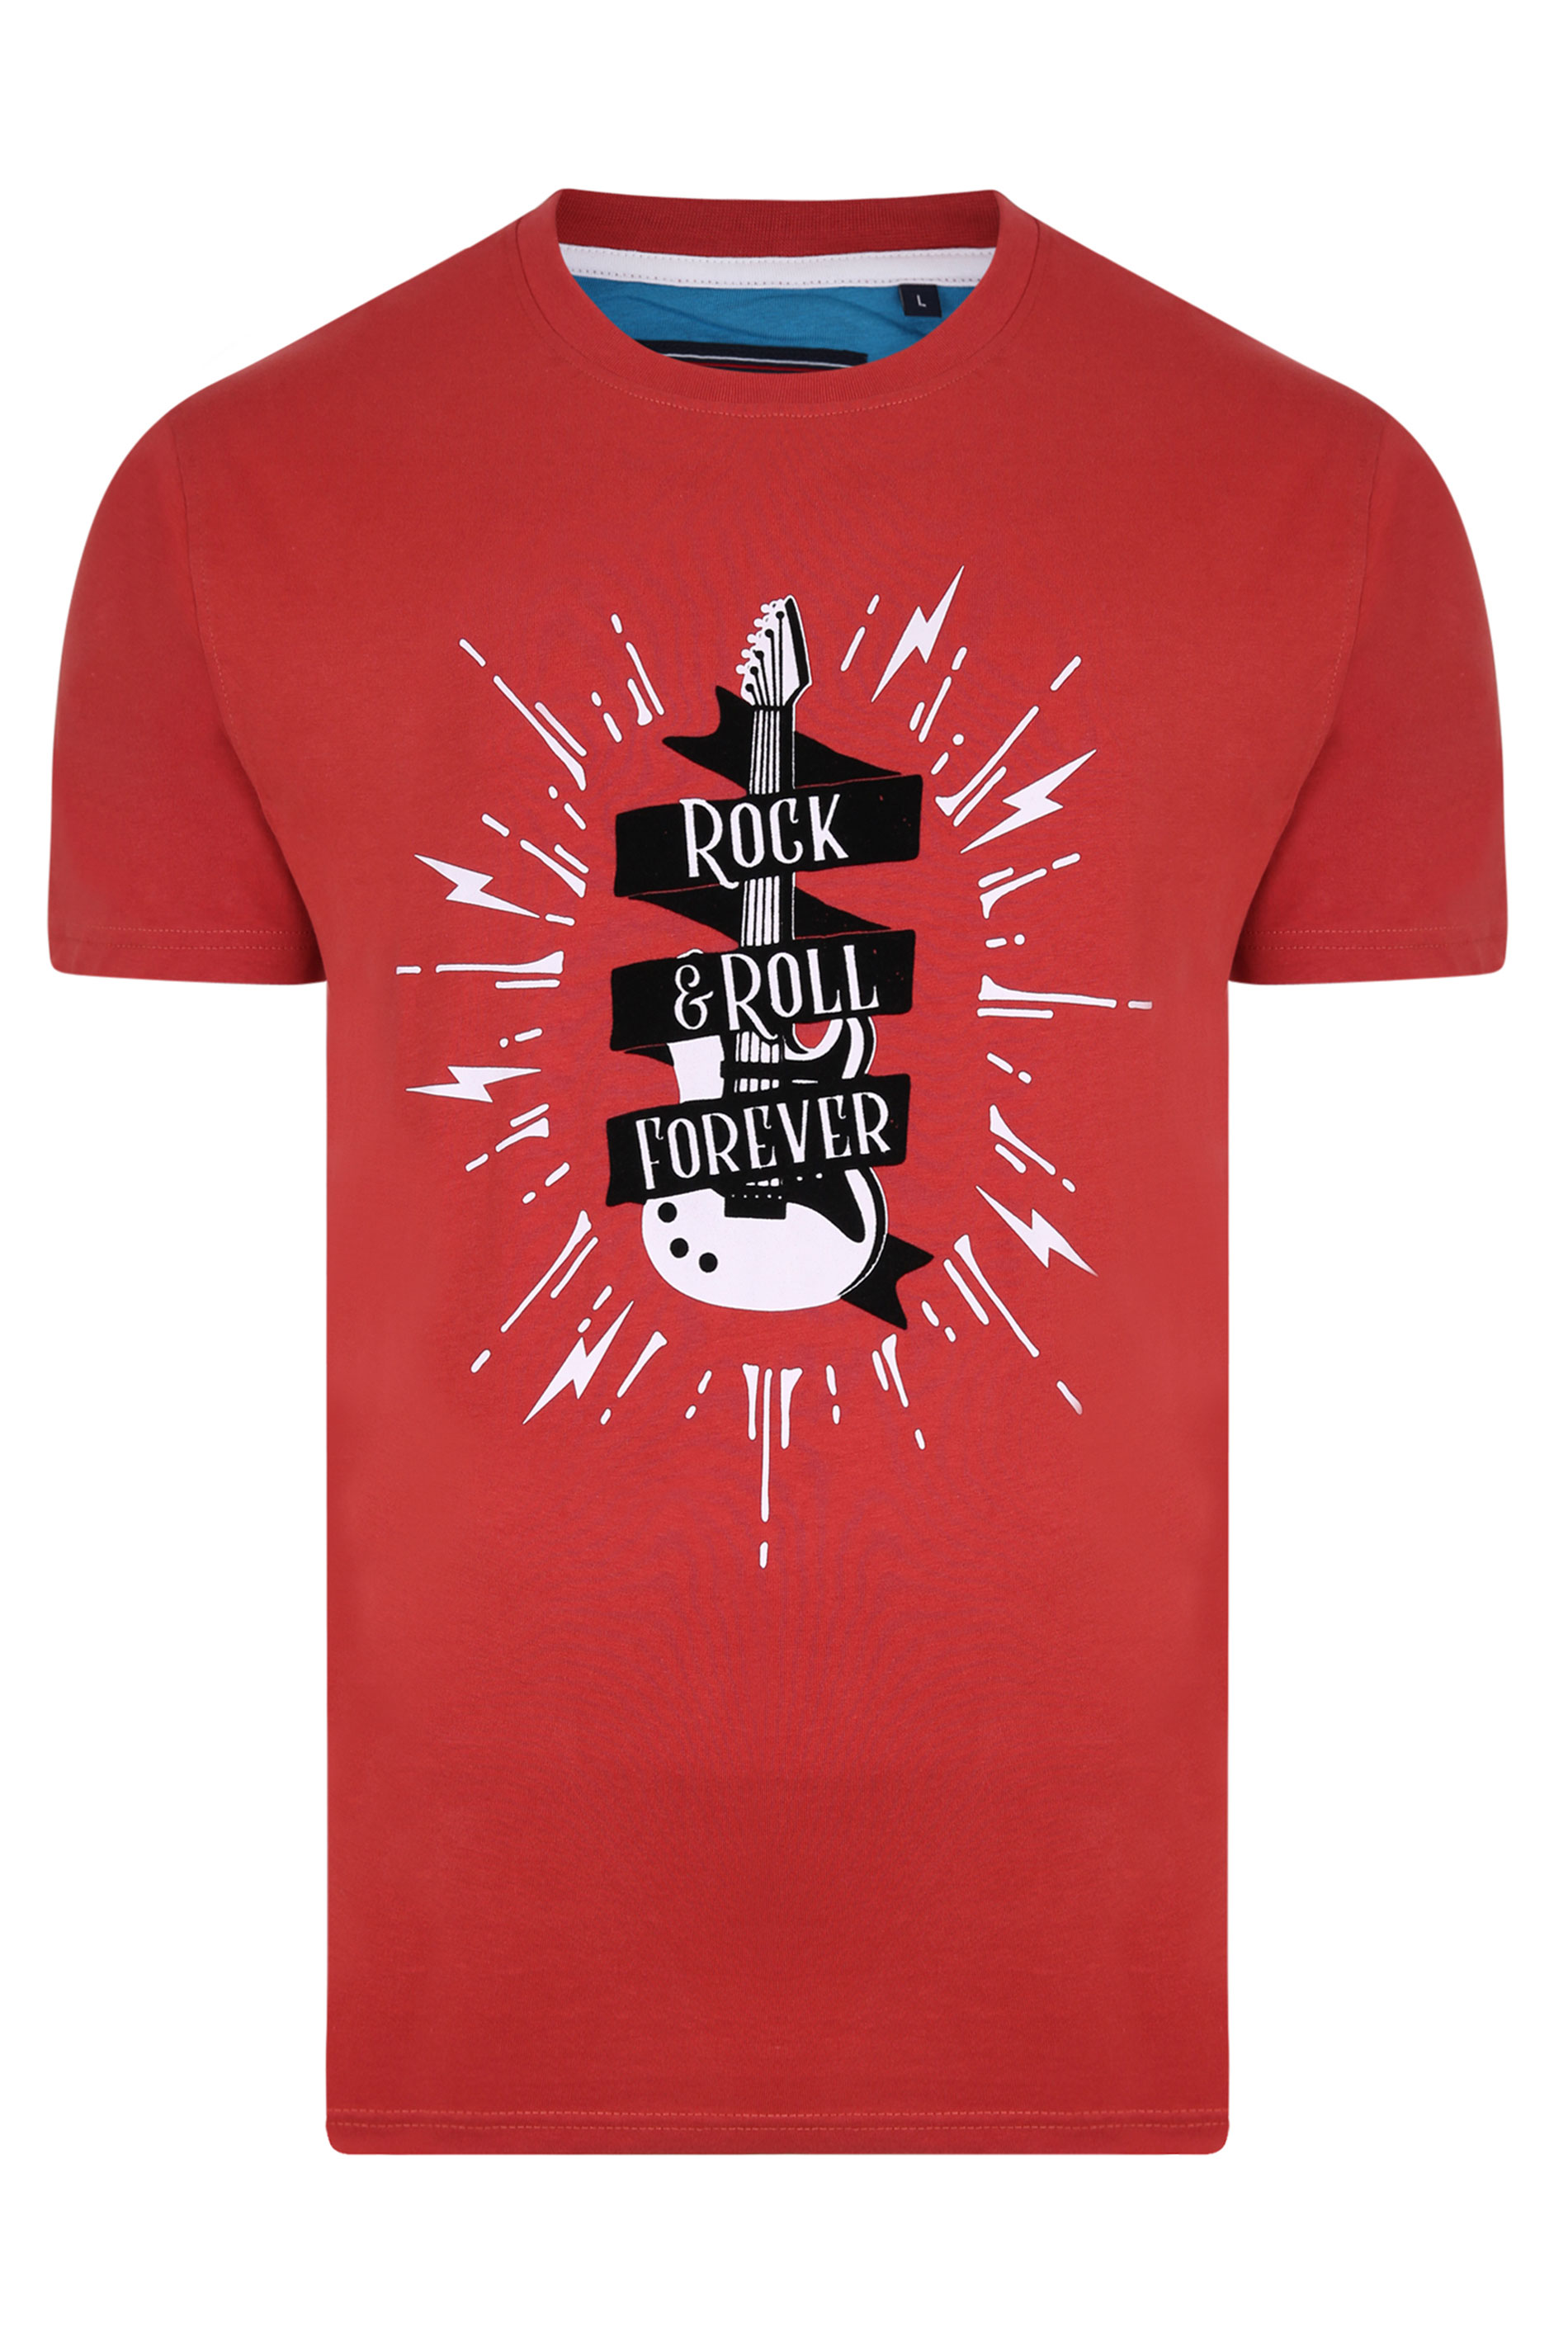 KAM Red Rock & Roll T-Shirt_F.jpg